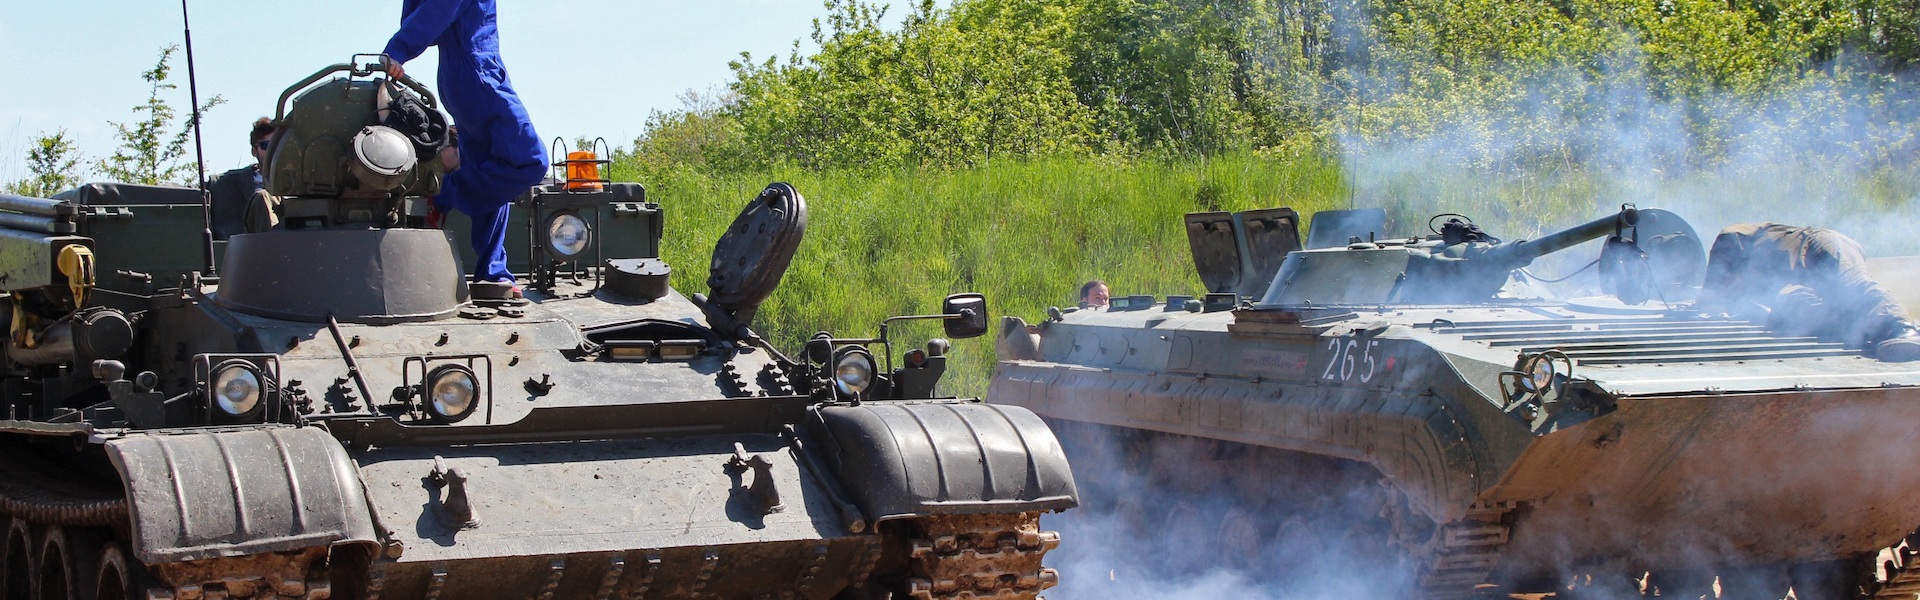 Panzer-Modelle